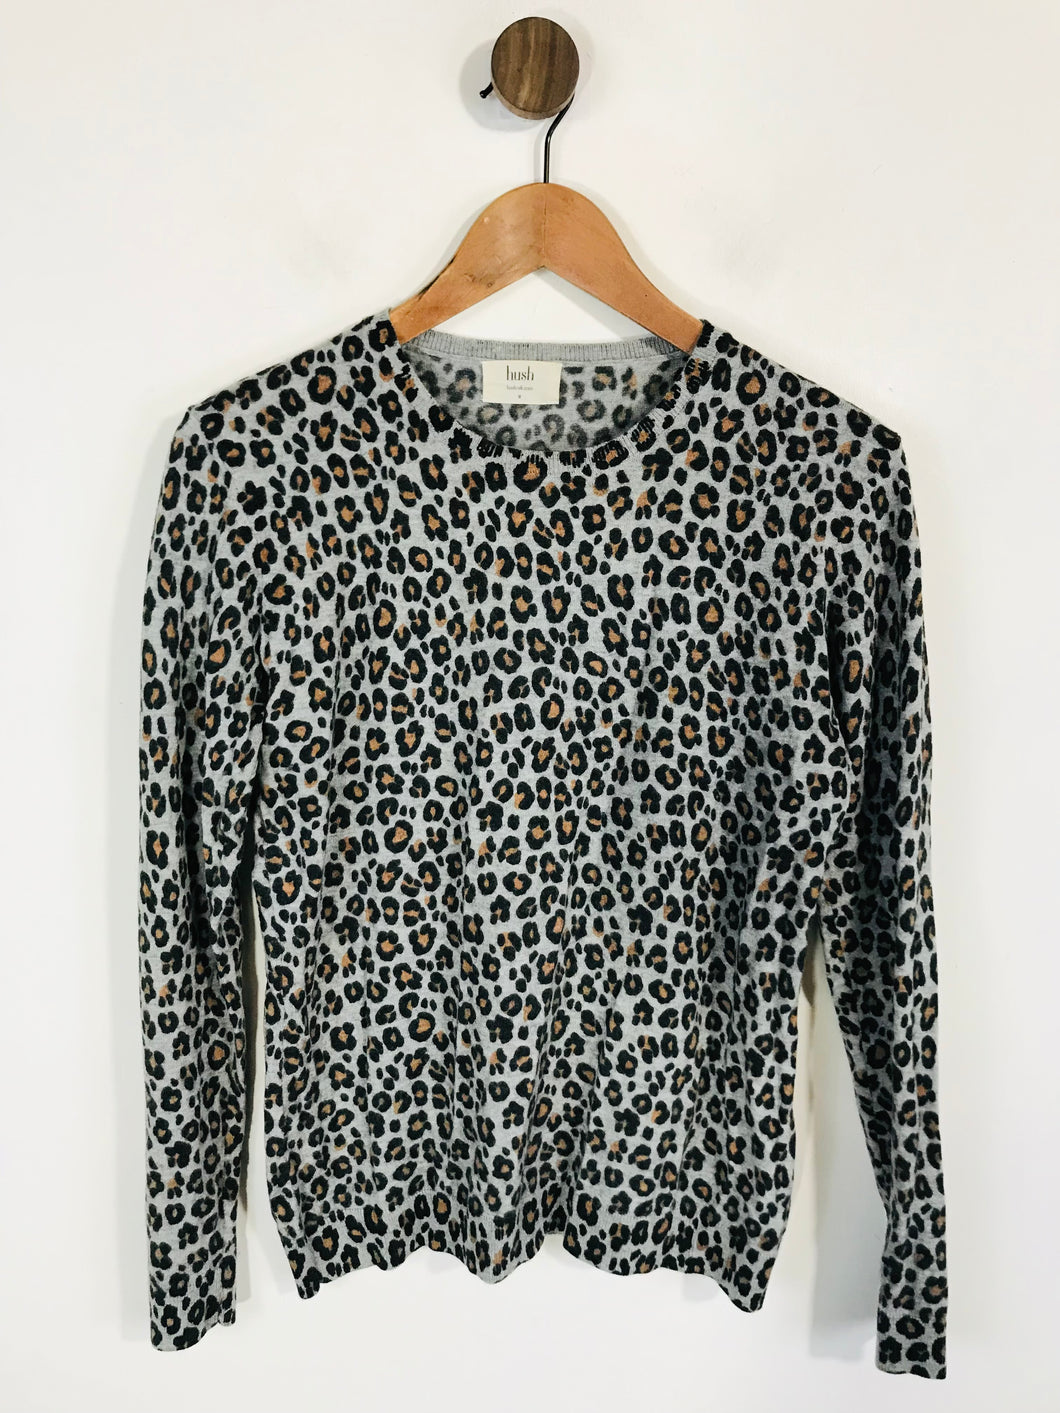 Hush Women's Wool Leopard Print Jumper | M UK10-12 | Multicoloured